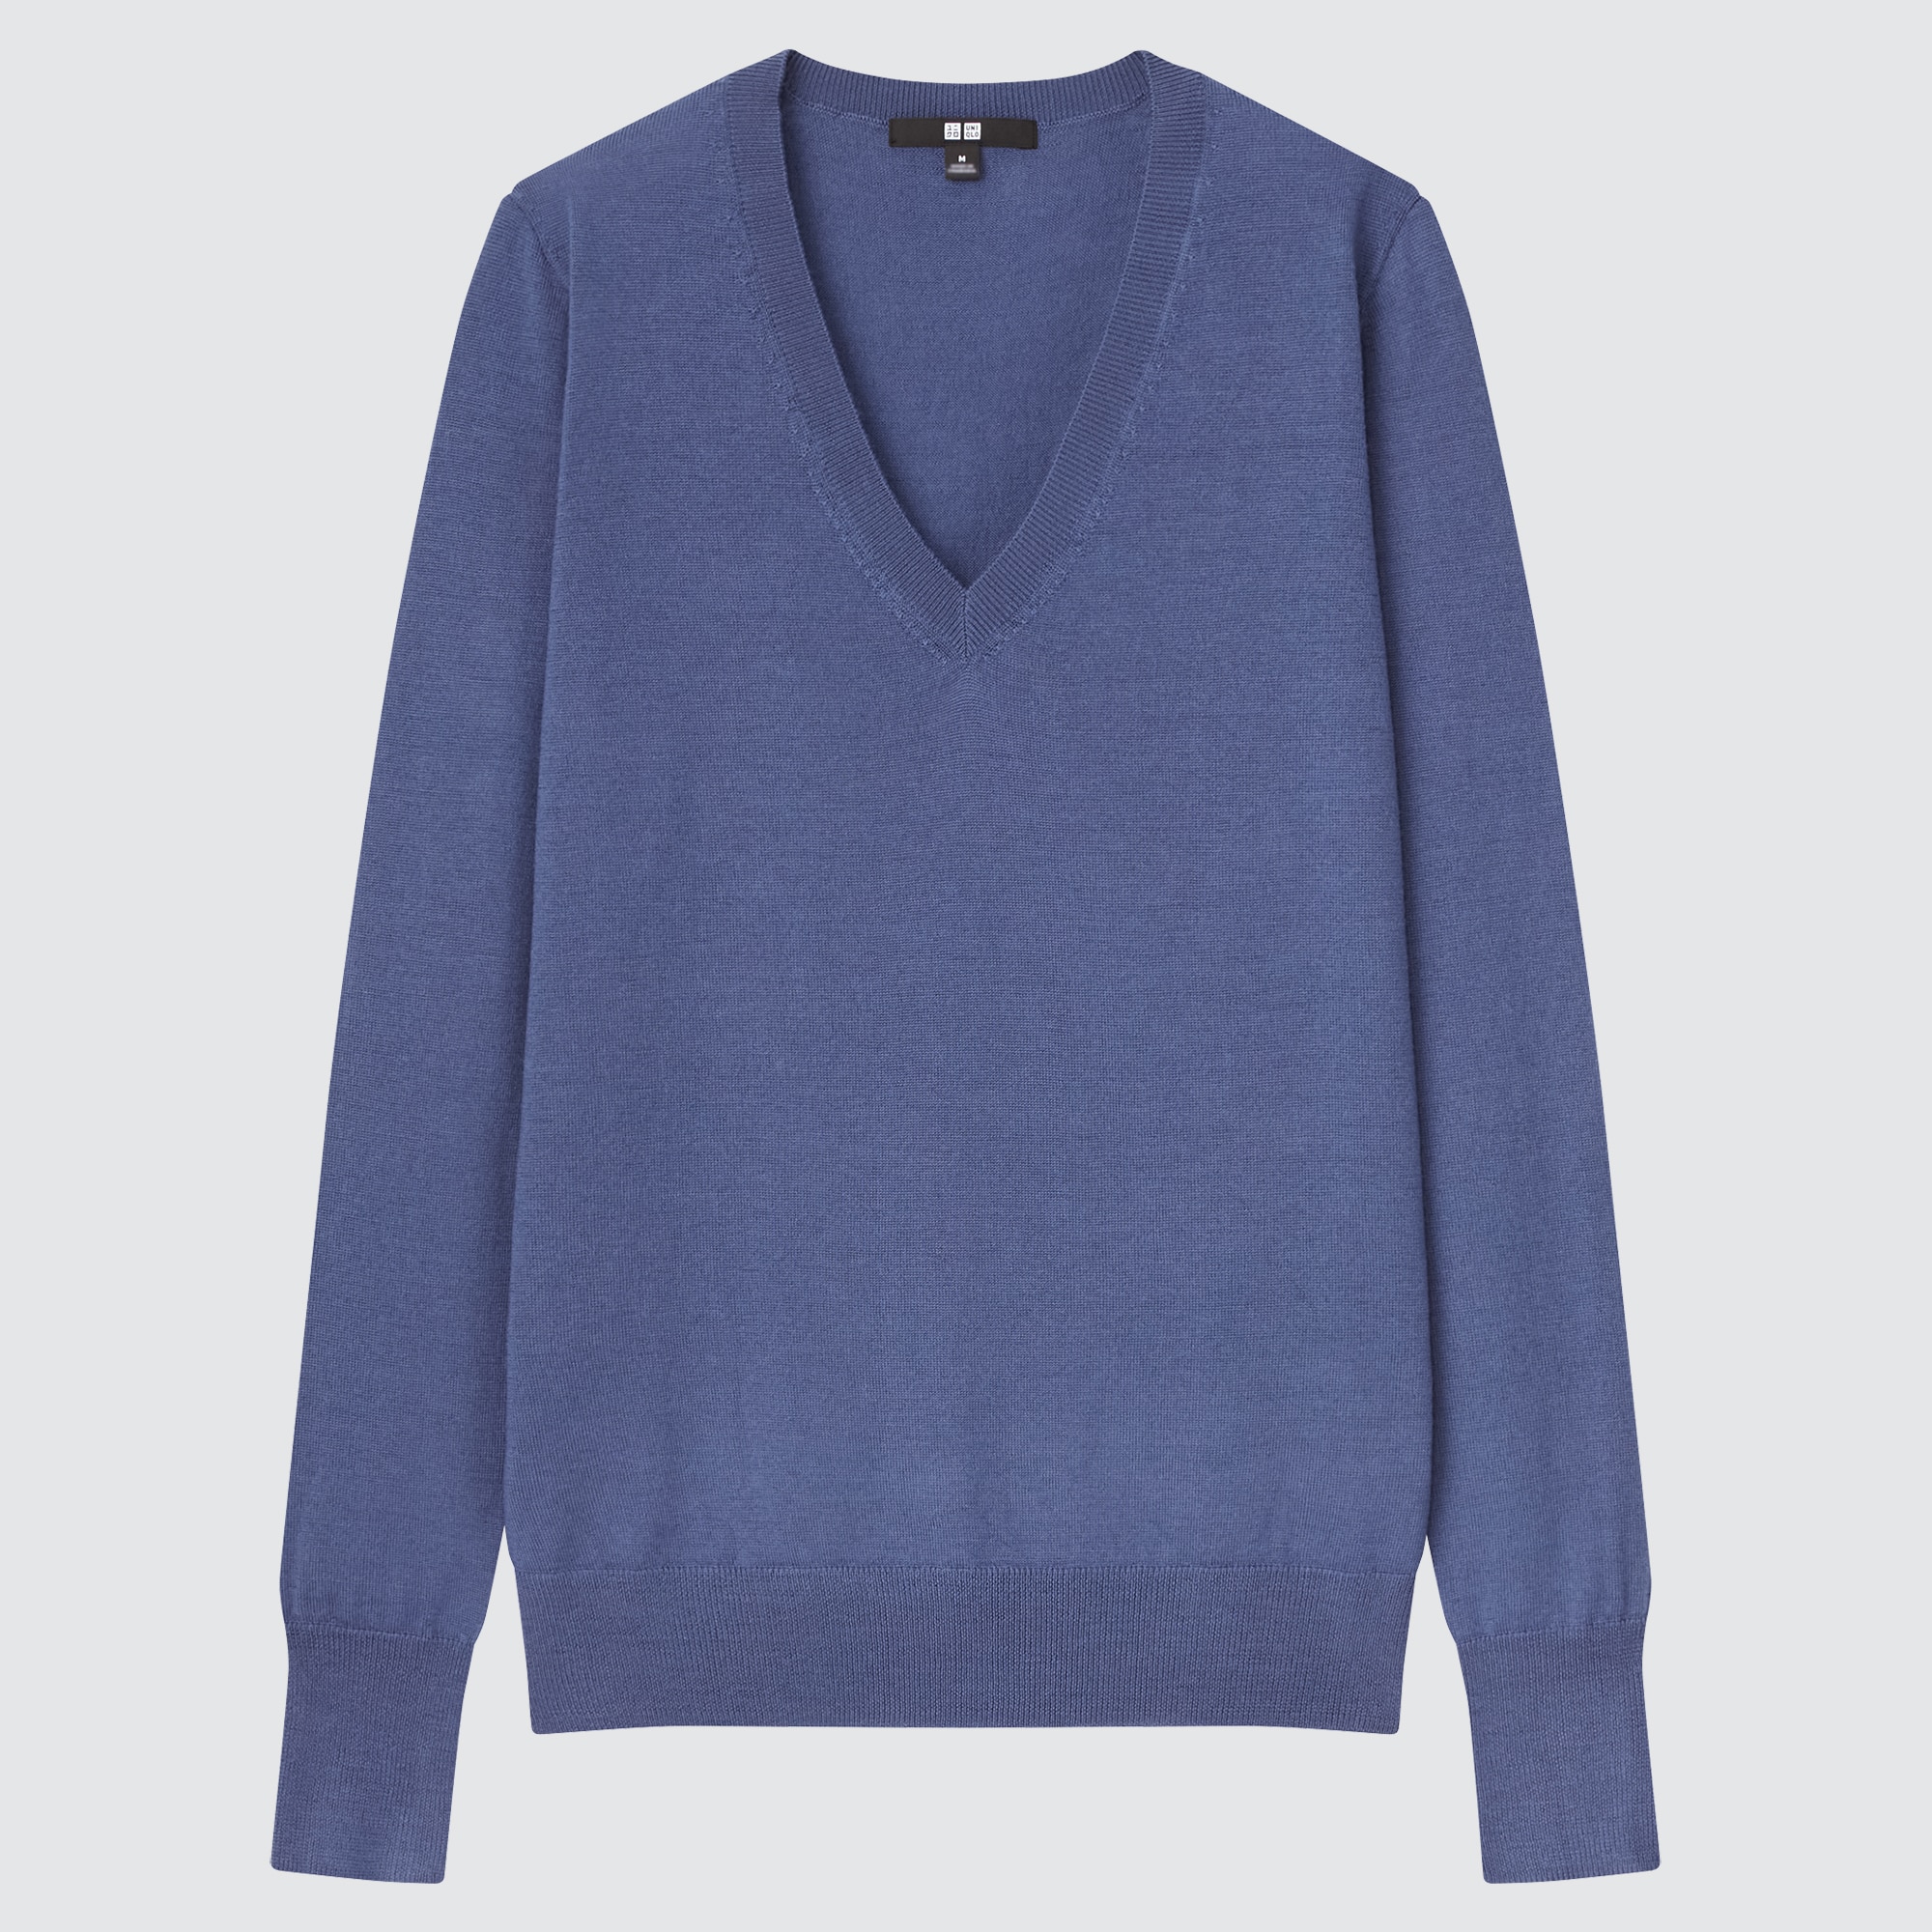 discount 55% Lefties sweatshirt MEN FASHION Jumpers & Sweatshirts Basic Blue M 